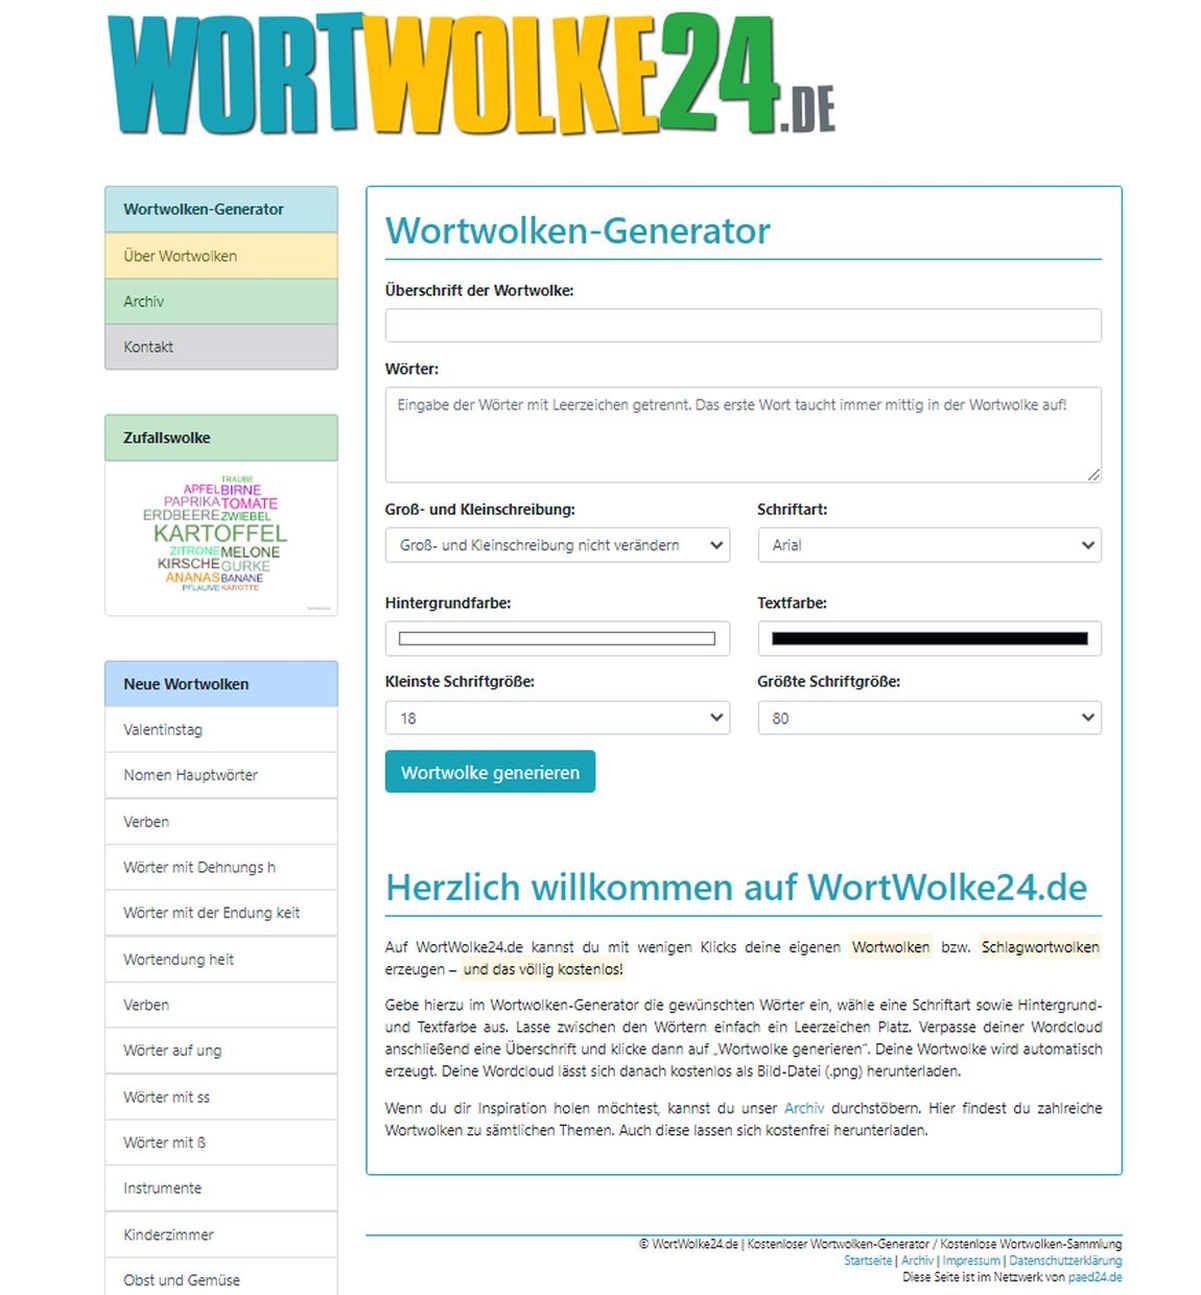 Tier Infos & Tier News @ Tier-News-247.de | die Oberflche der WortWolke